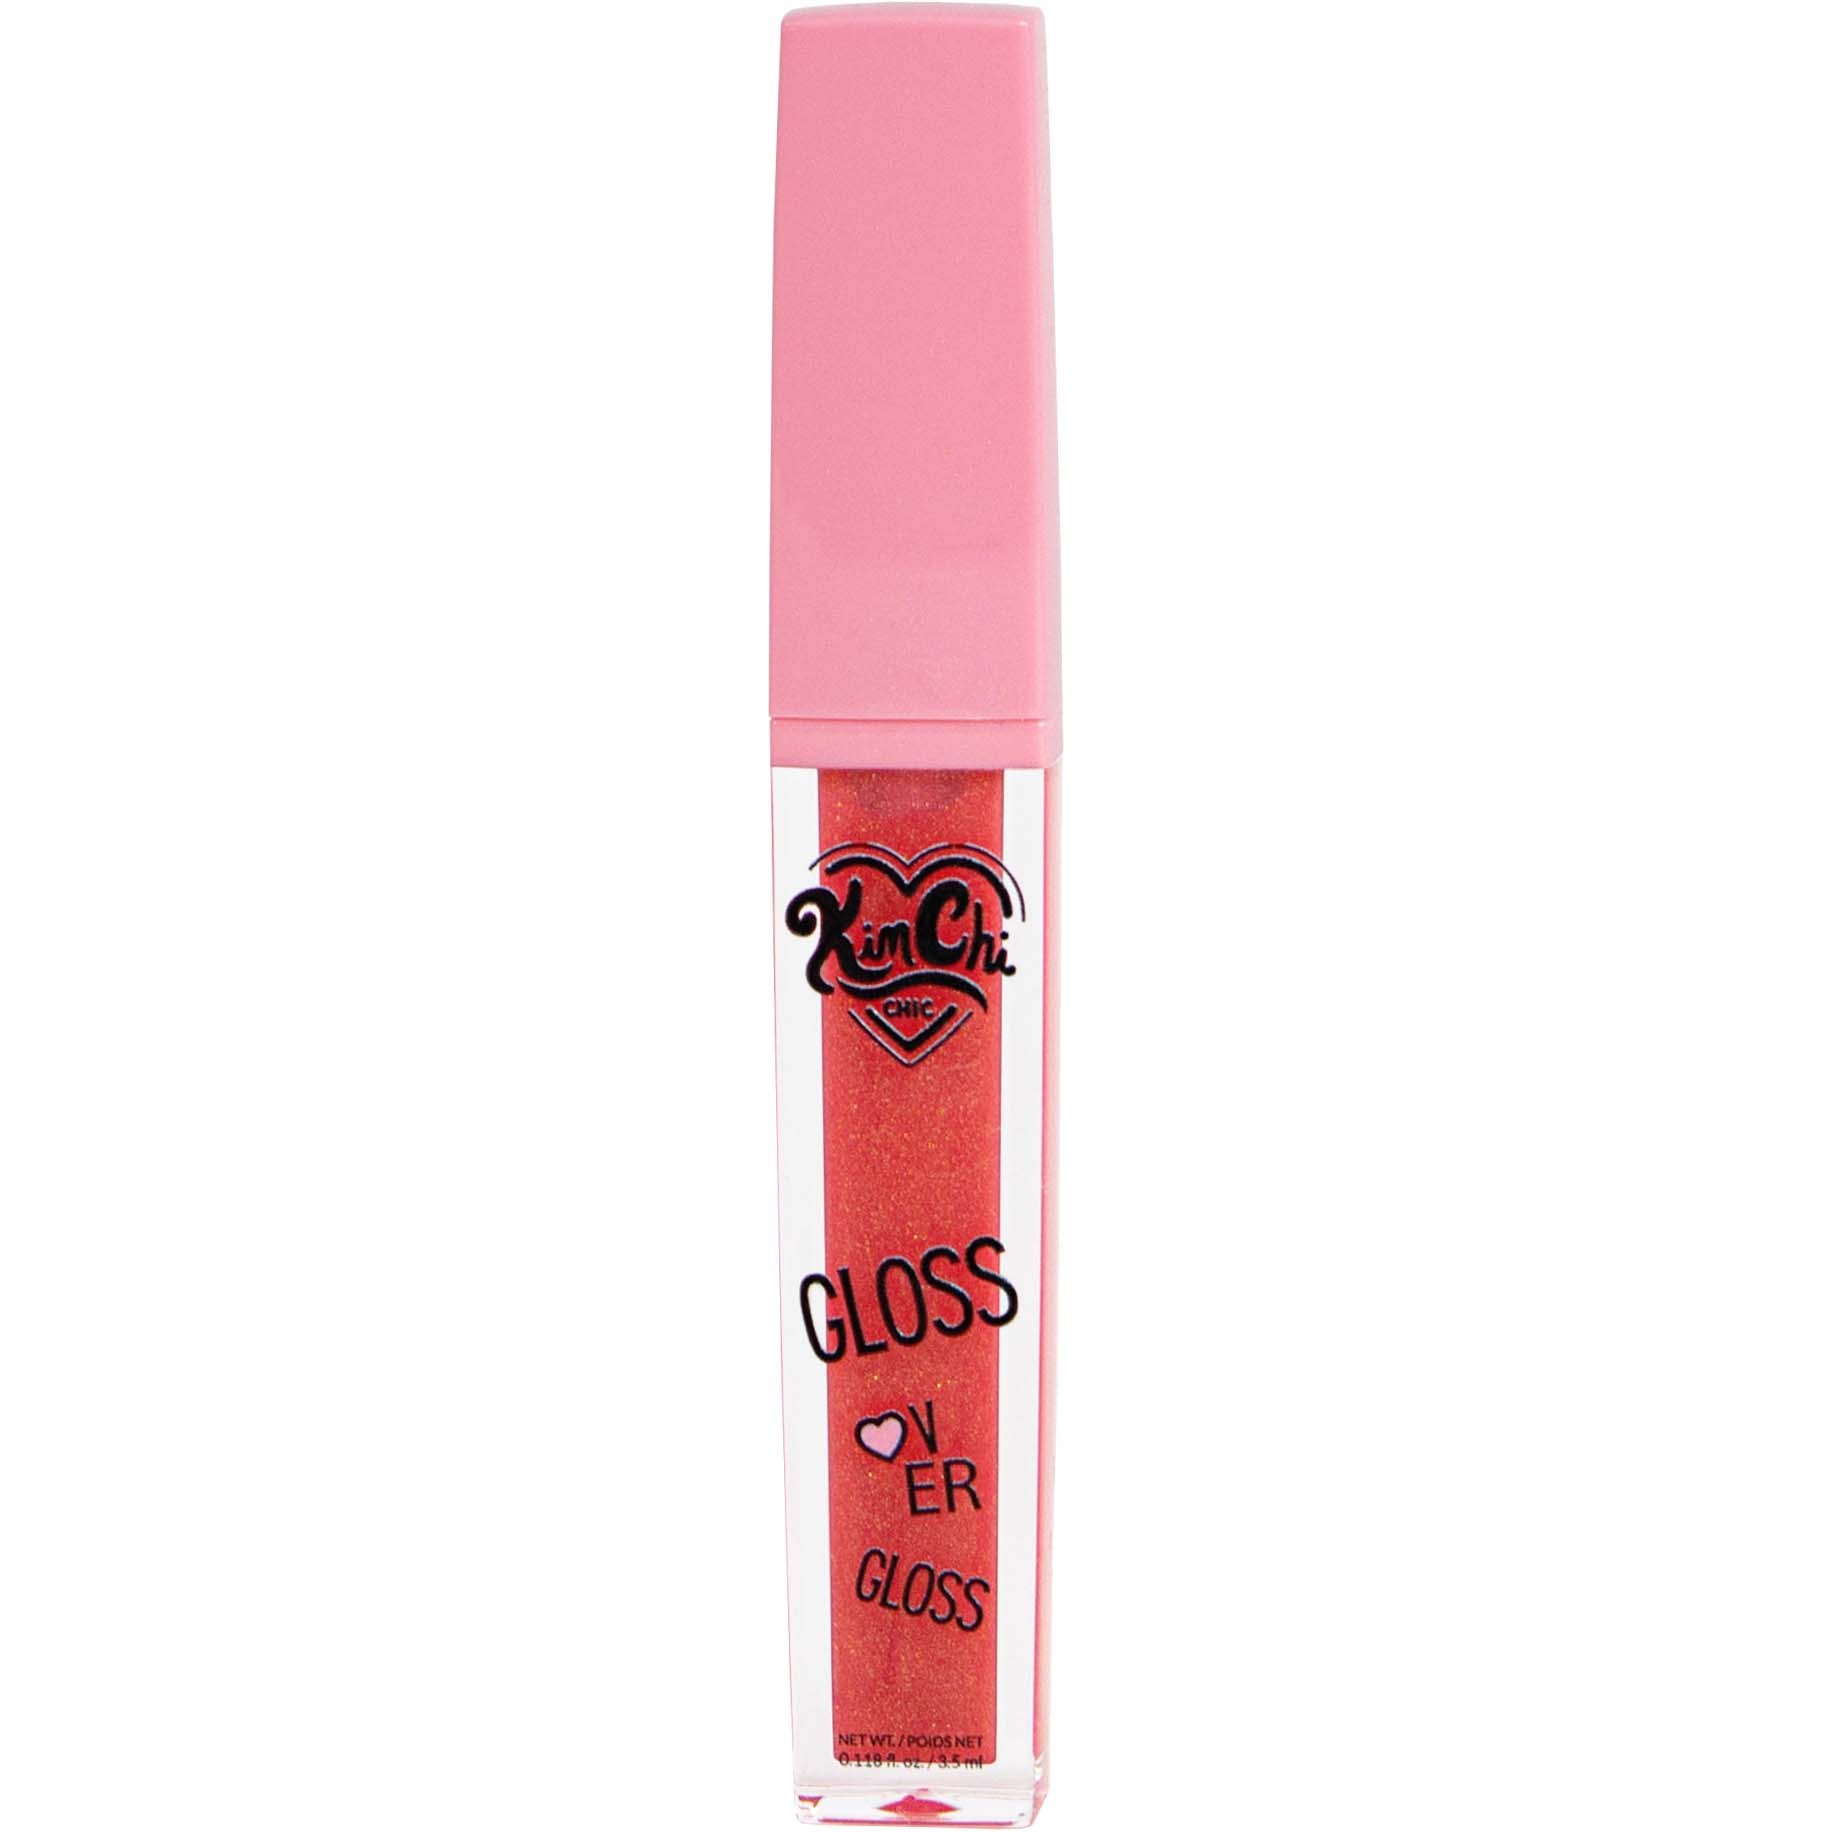 Bilde av Kimchi Chic Gloss Over Gloss Full Coverage Lipgloss Ripe Mango